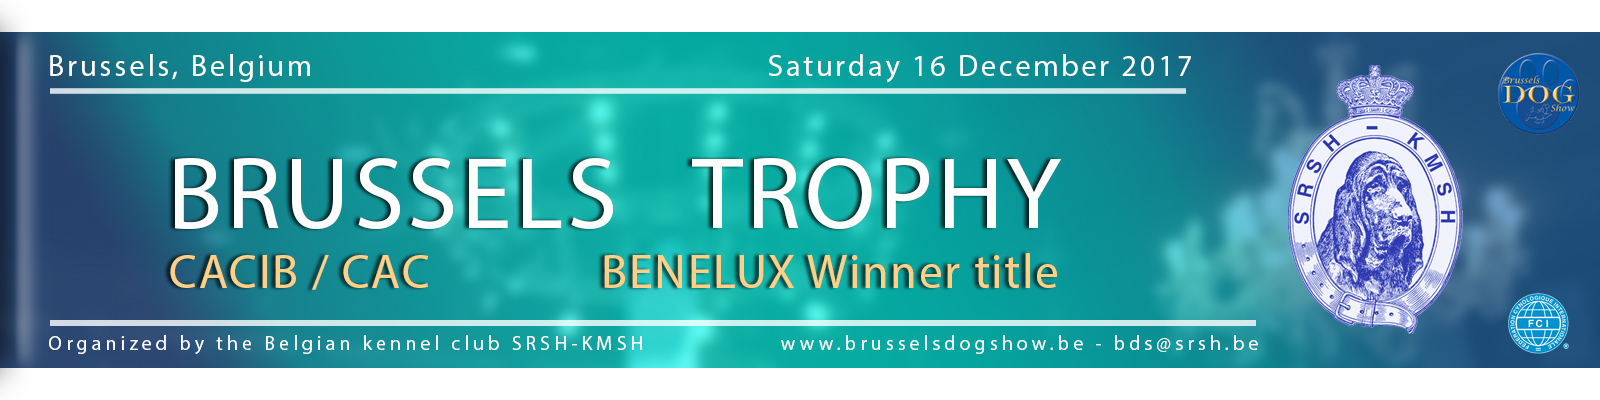 Brussels Trophy - Saturday 16/12/2017